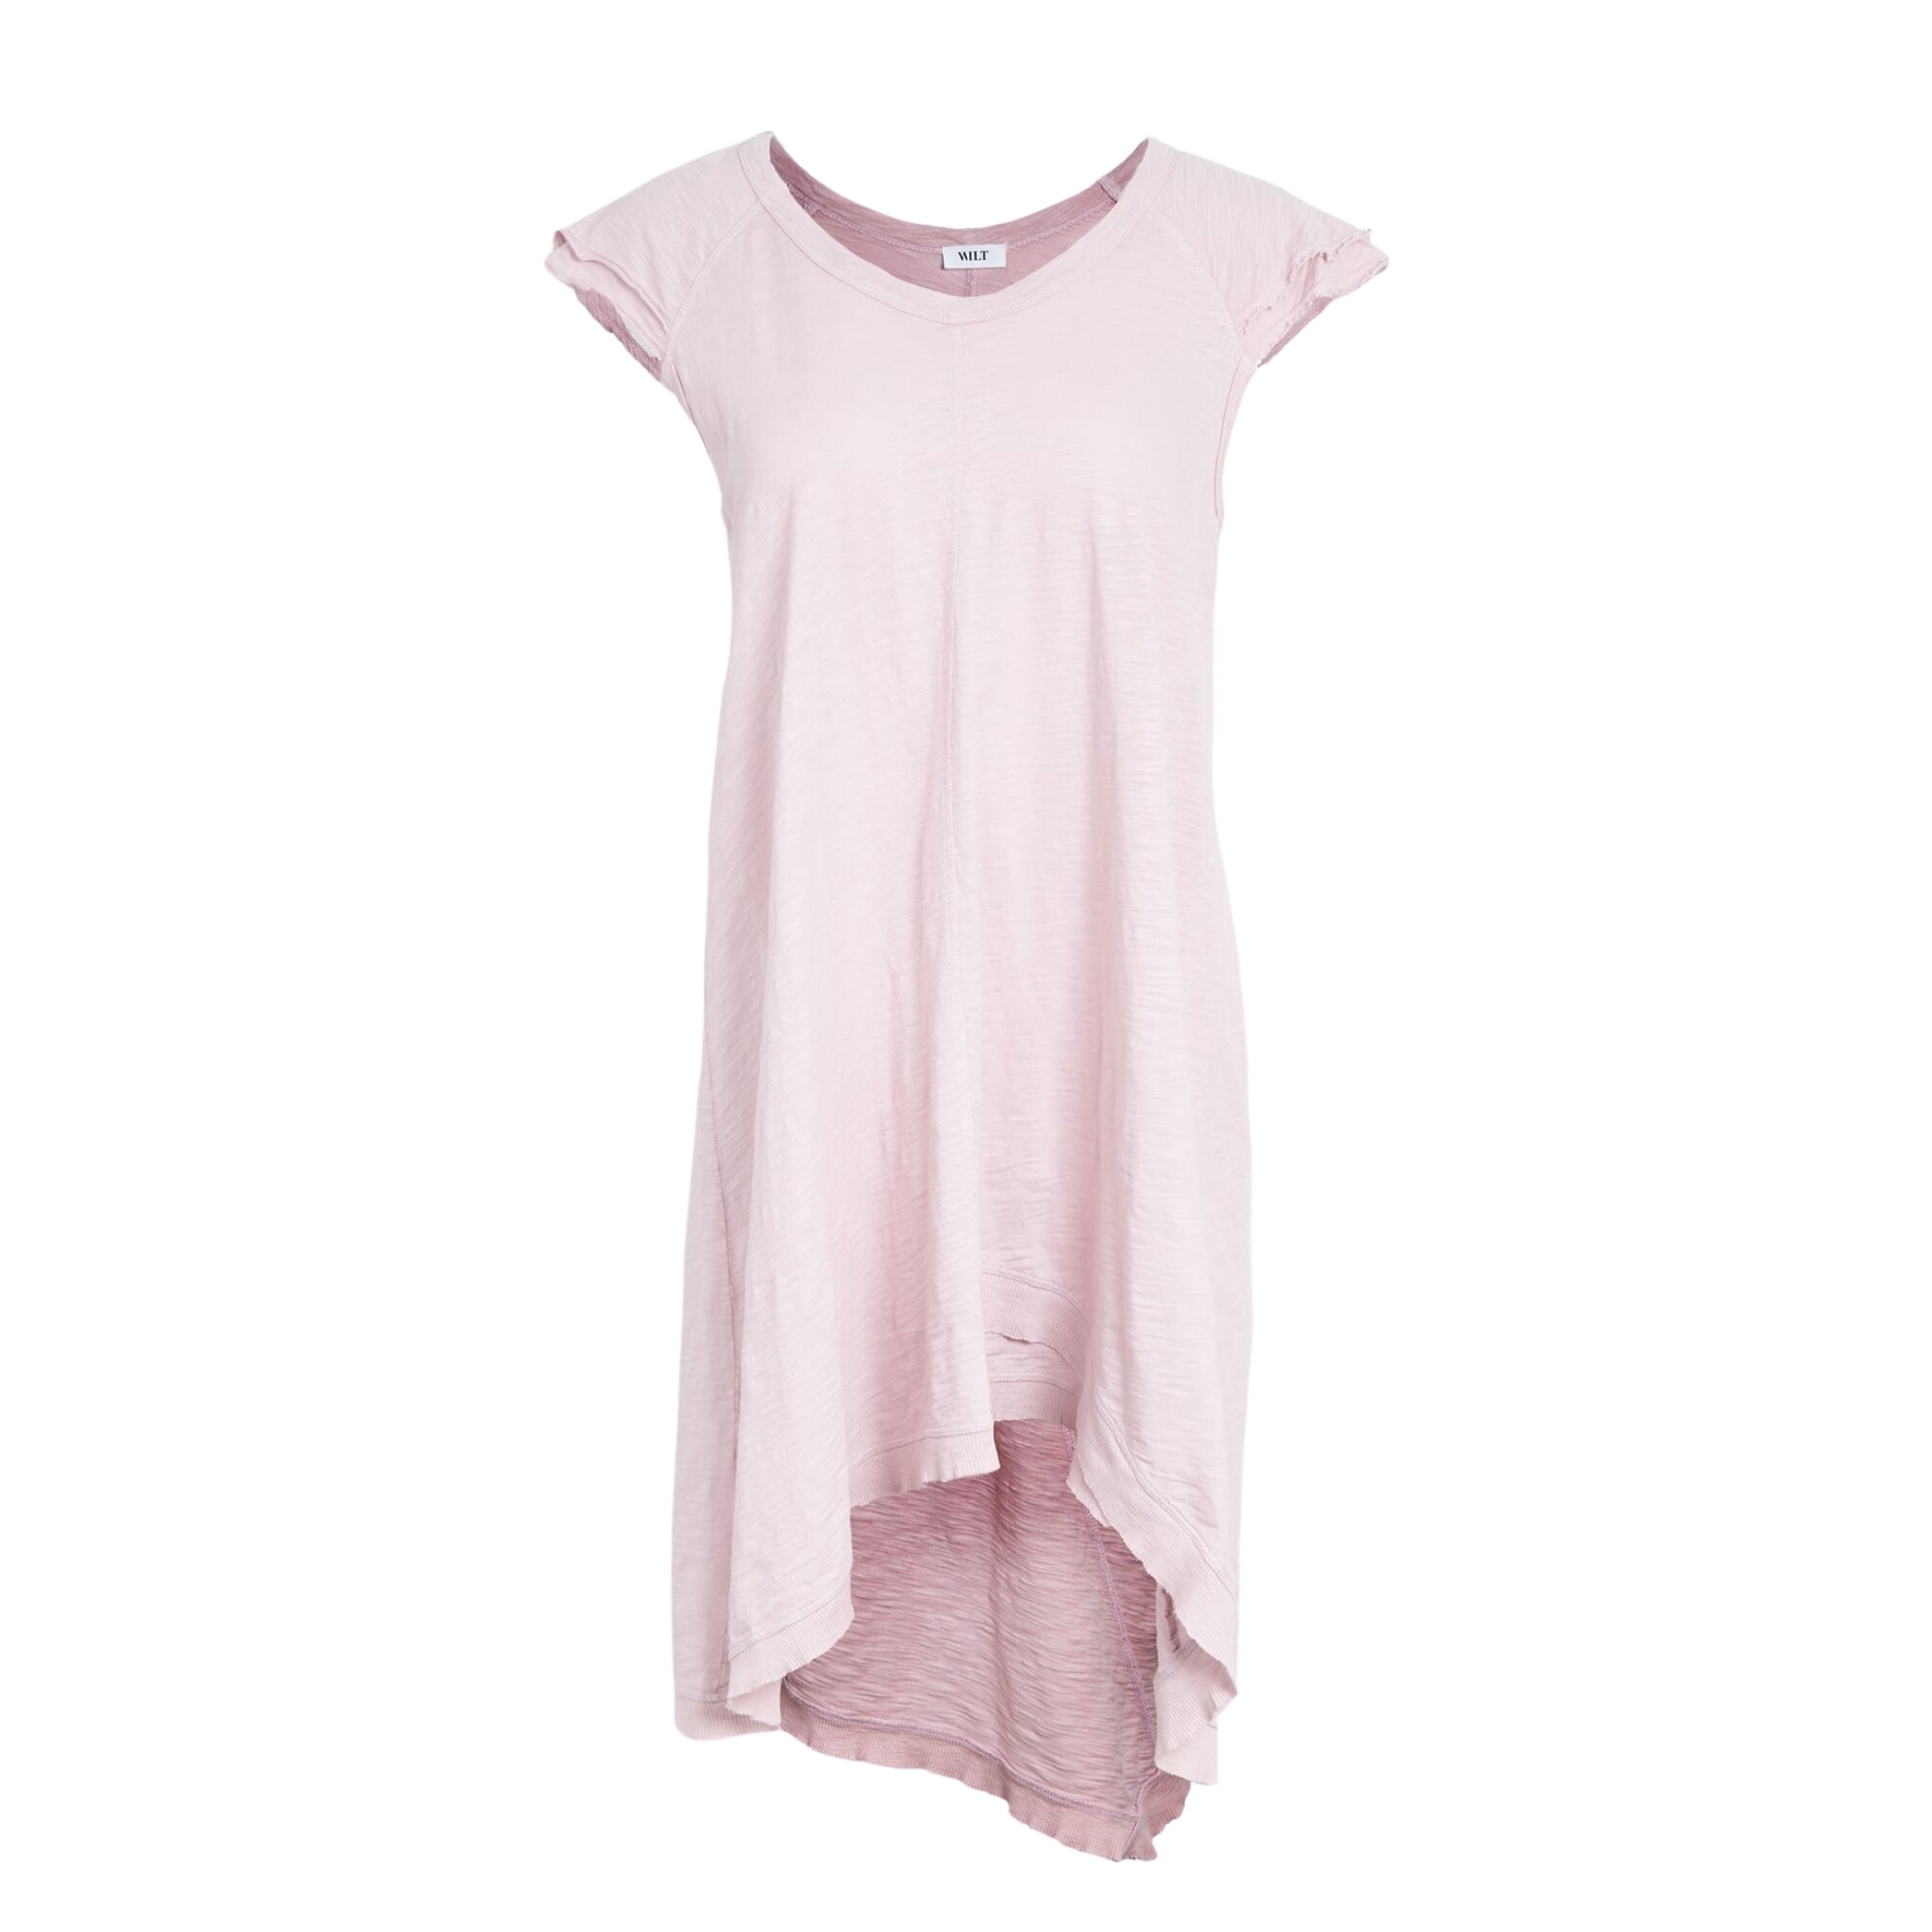 Flutter Sleeve Dress, Shopbop, $172 (machine wash)